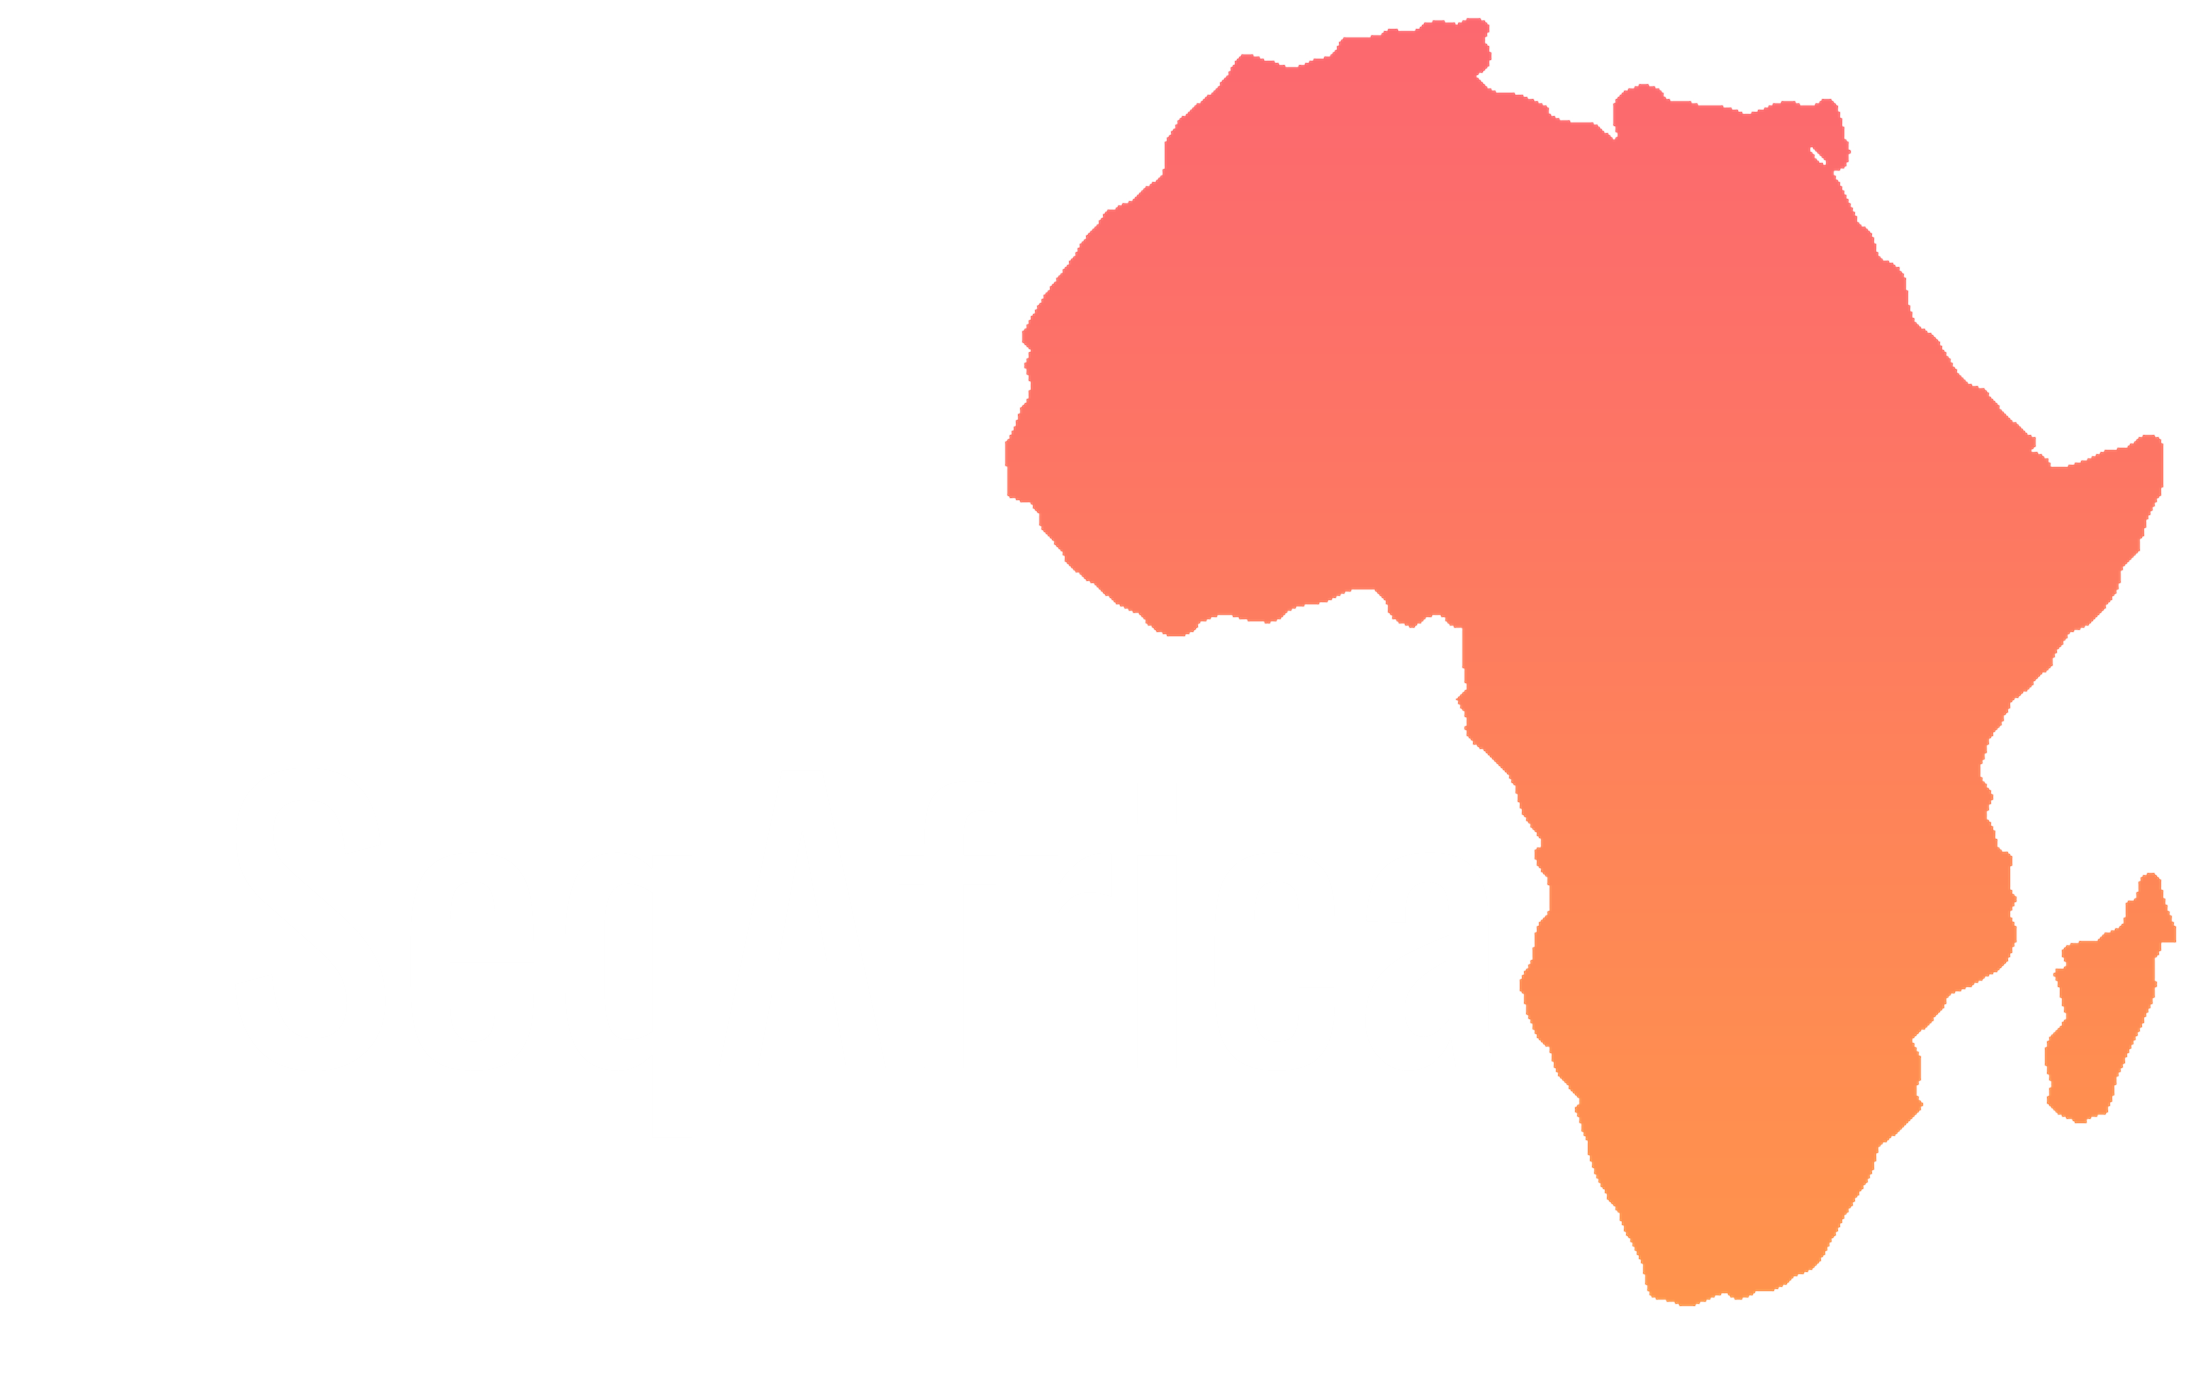 Kort over Africa